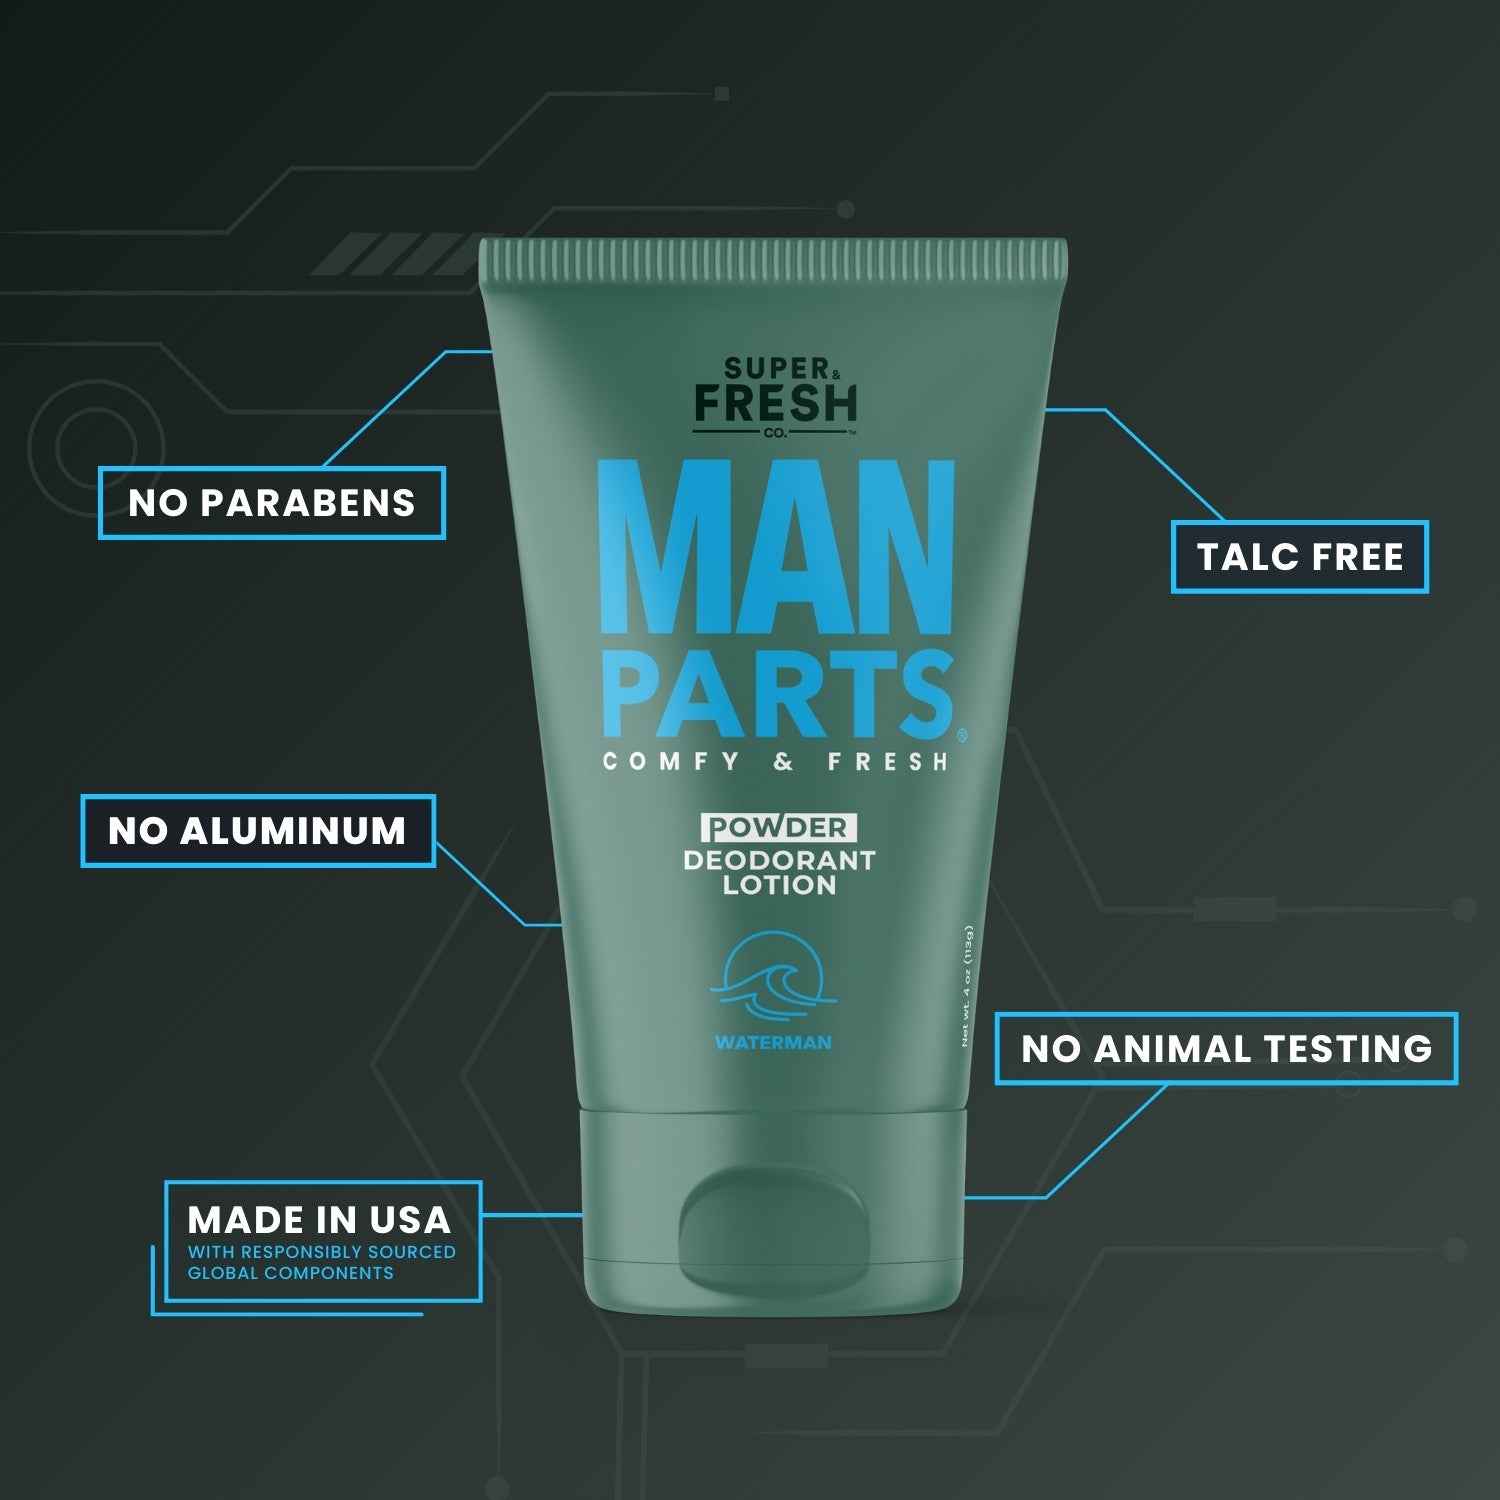 Man Parts Deodorant Lotion - Powder - Waterman